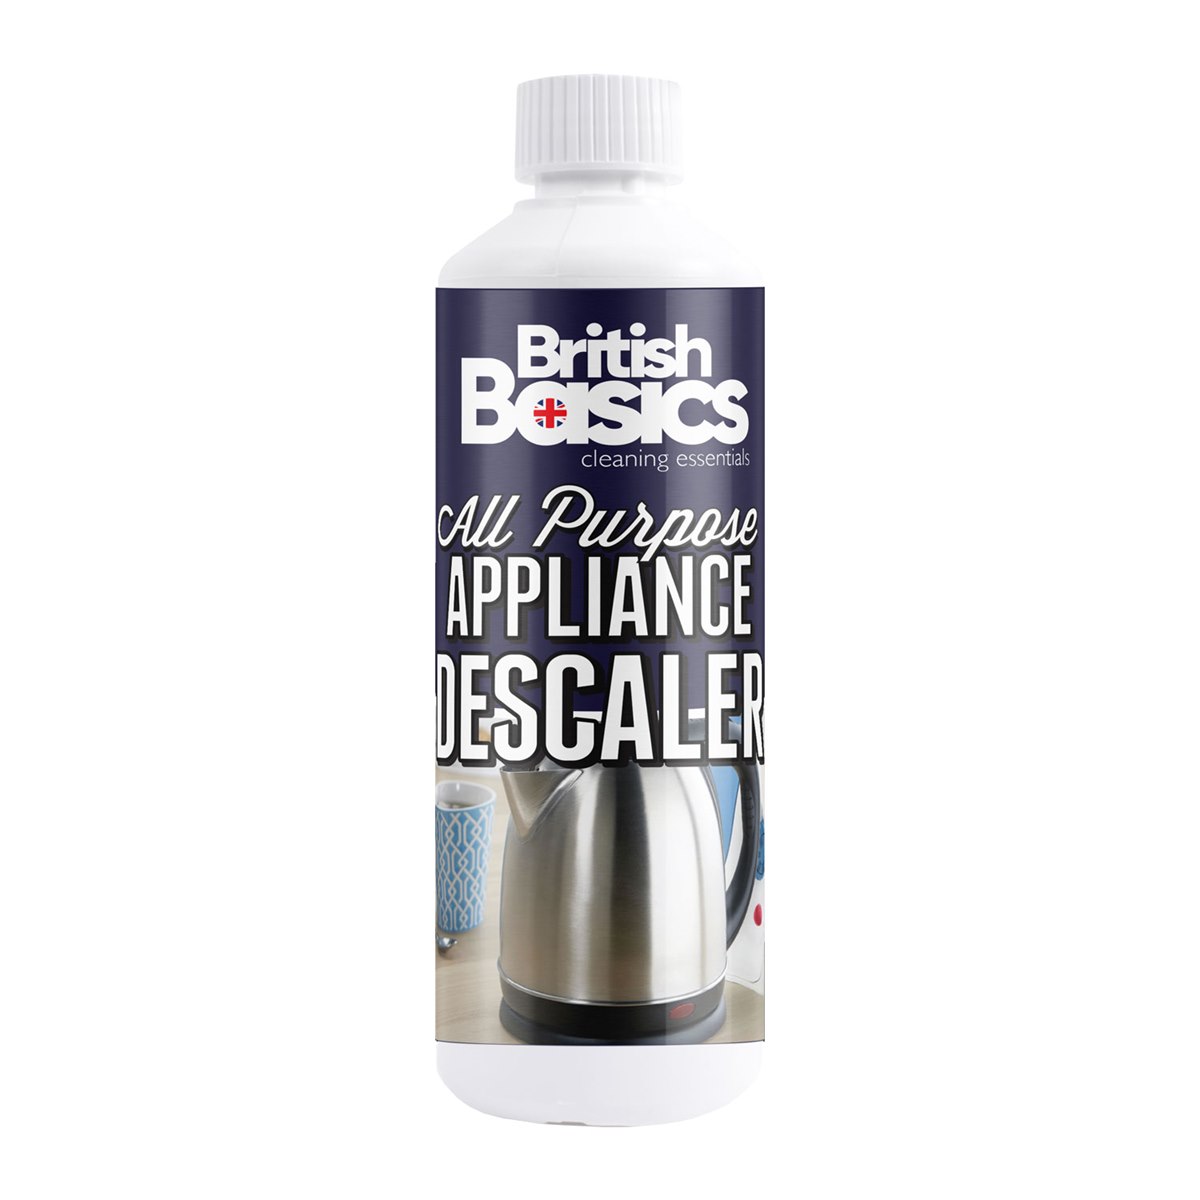 British Basics All Purpose Appliance Descaler